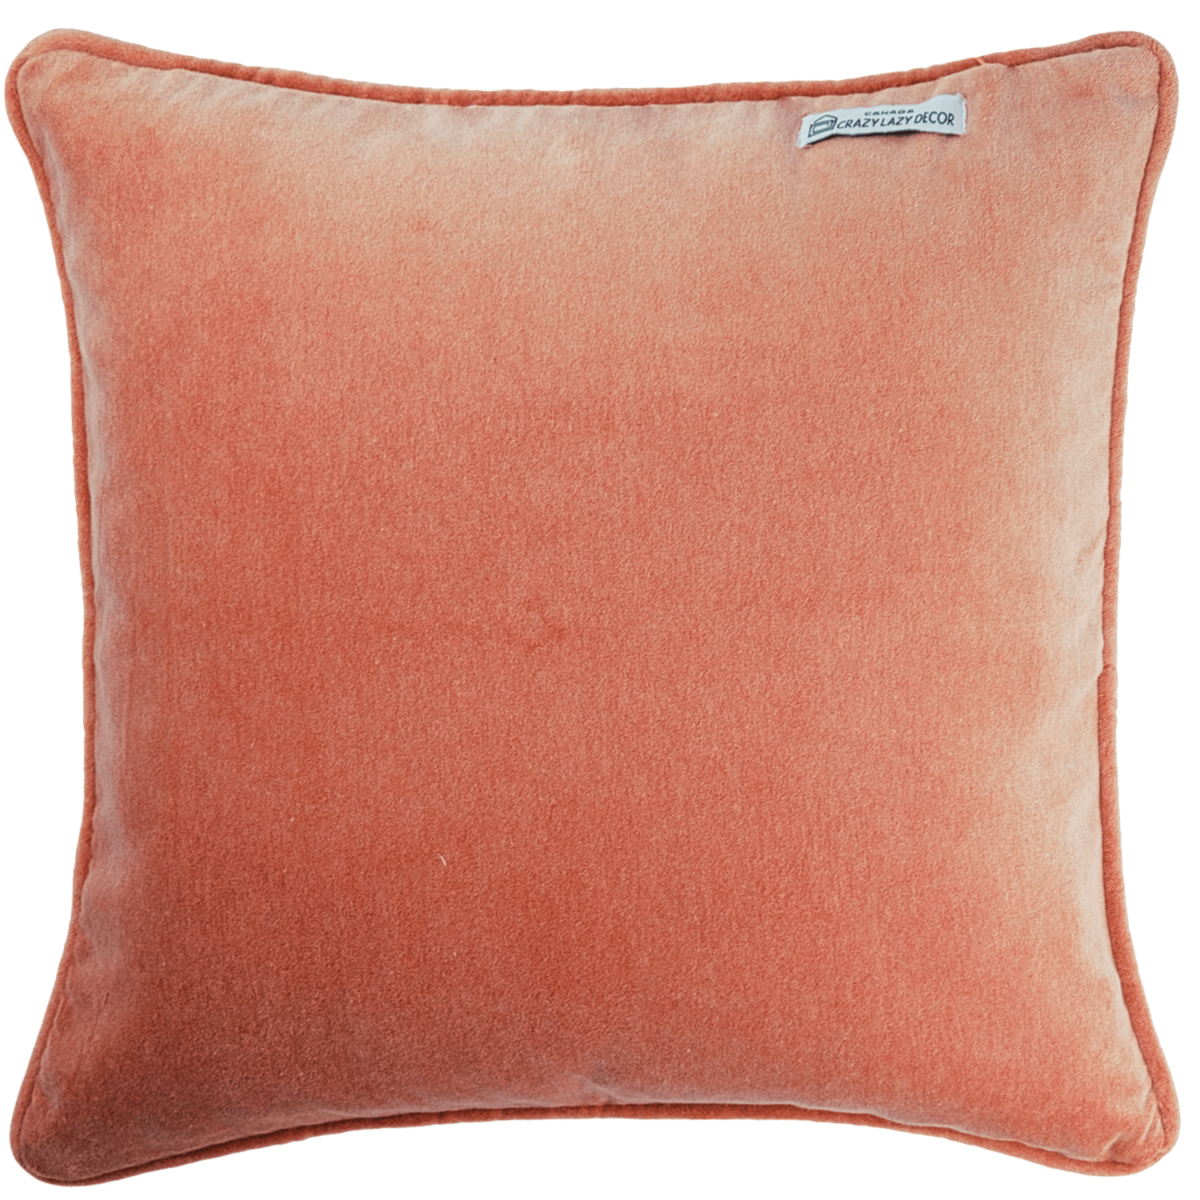 coral velvet plain decorative cushion covers